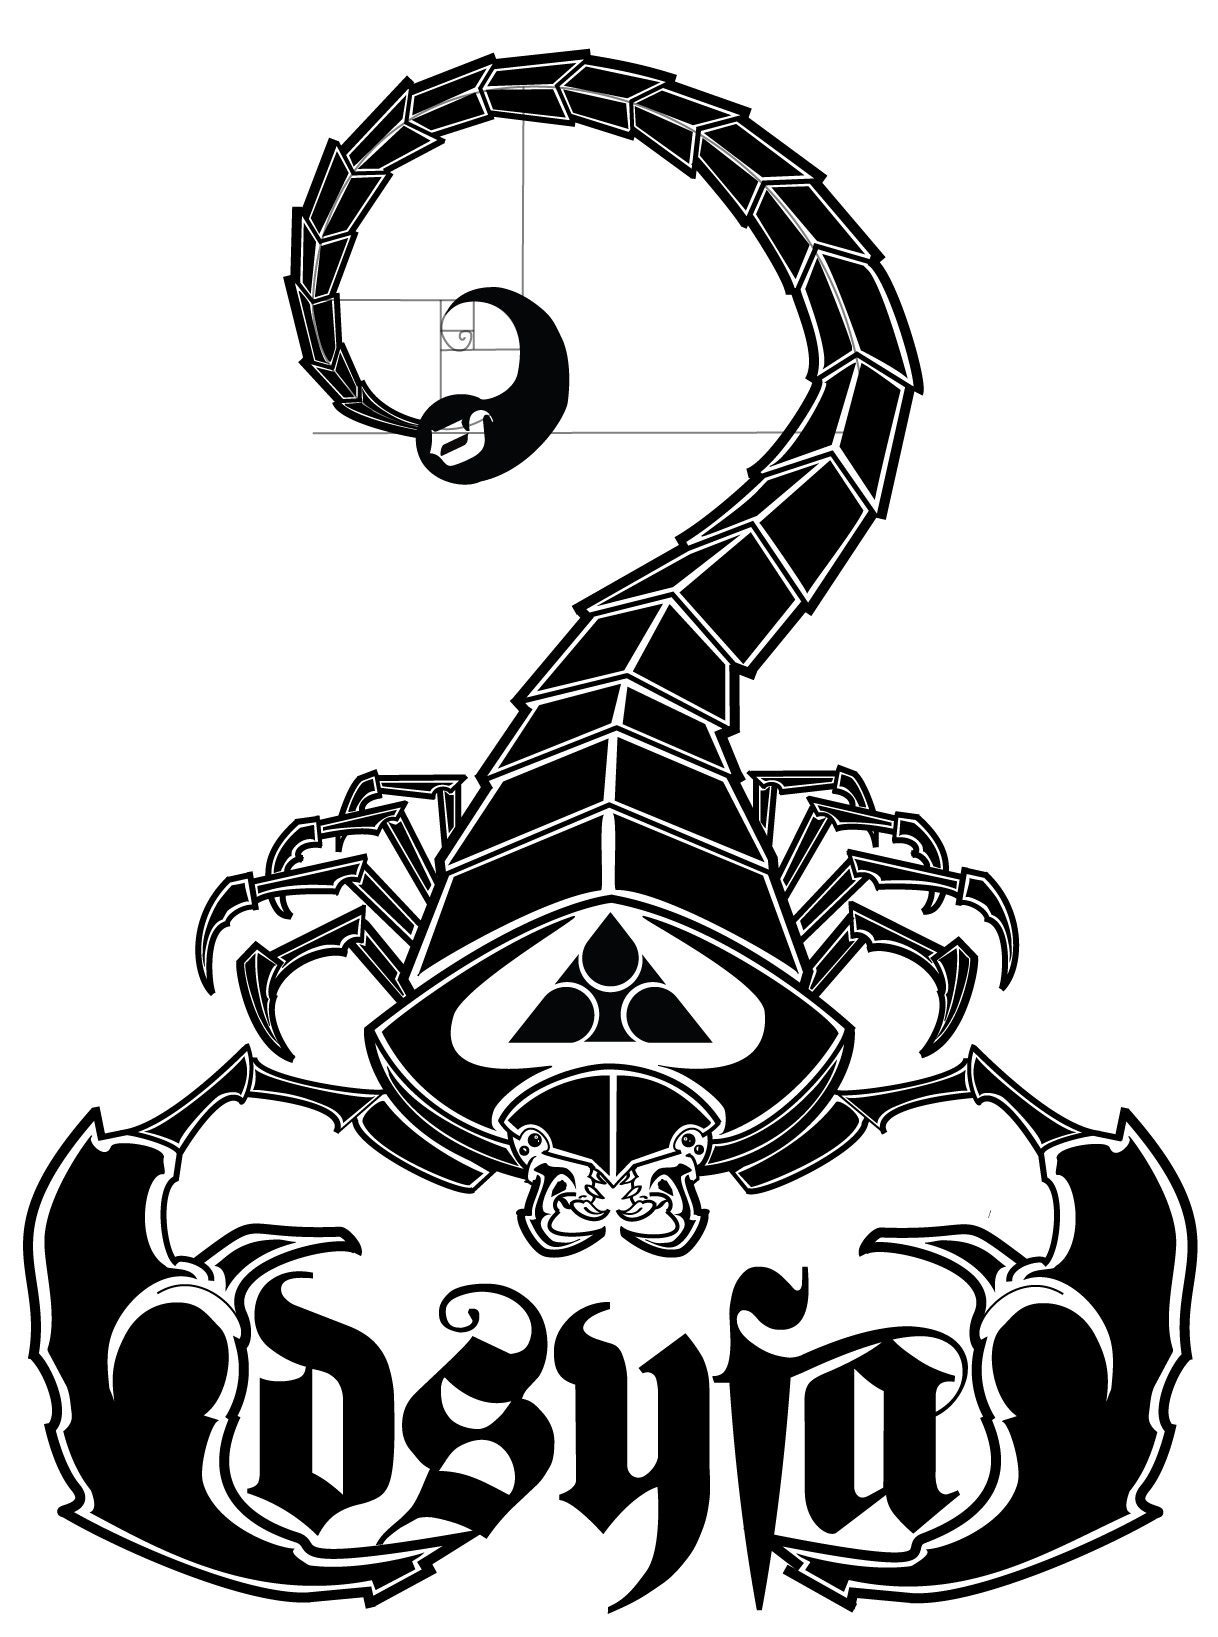 Scorpio duck. Скорпион. Скорпион эмблема. Скорпион вектор. Скорпион символ.